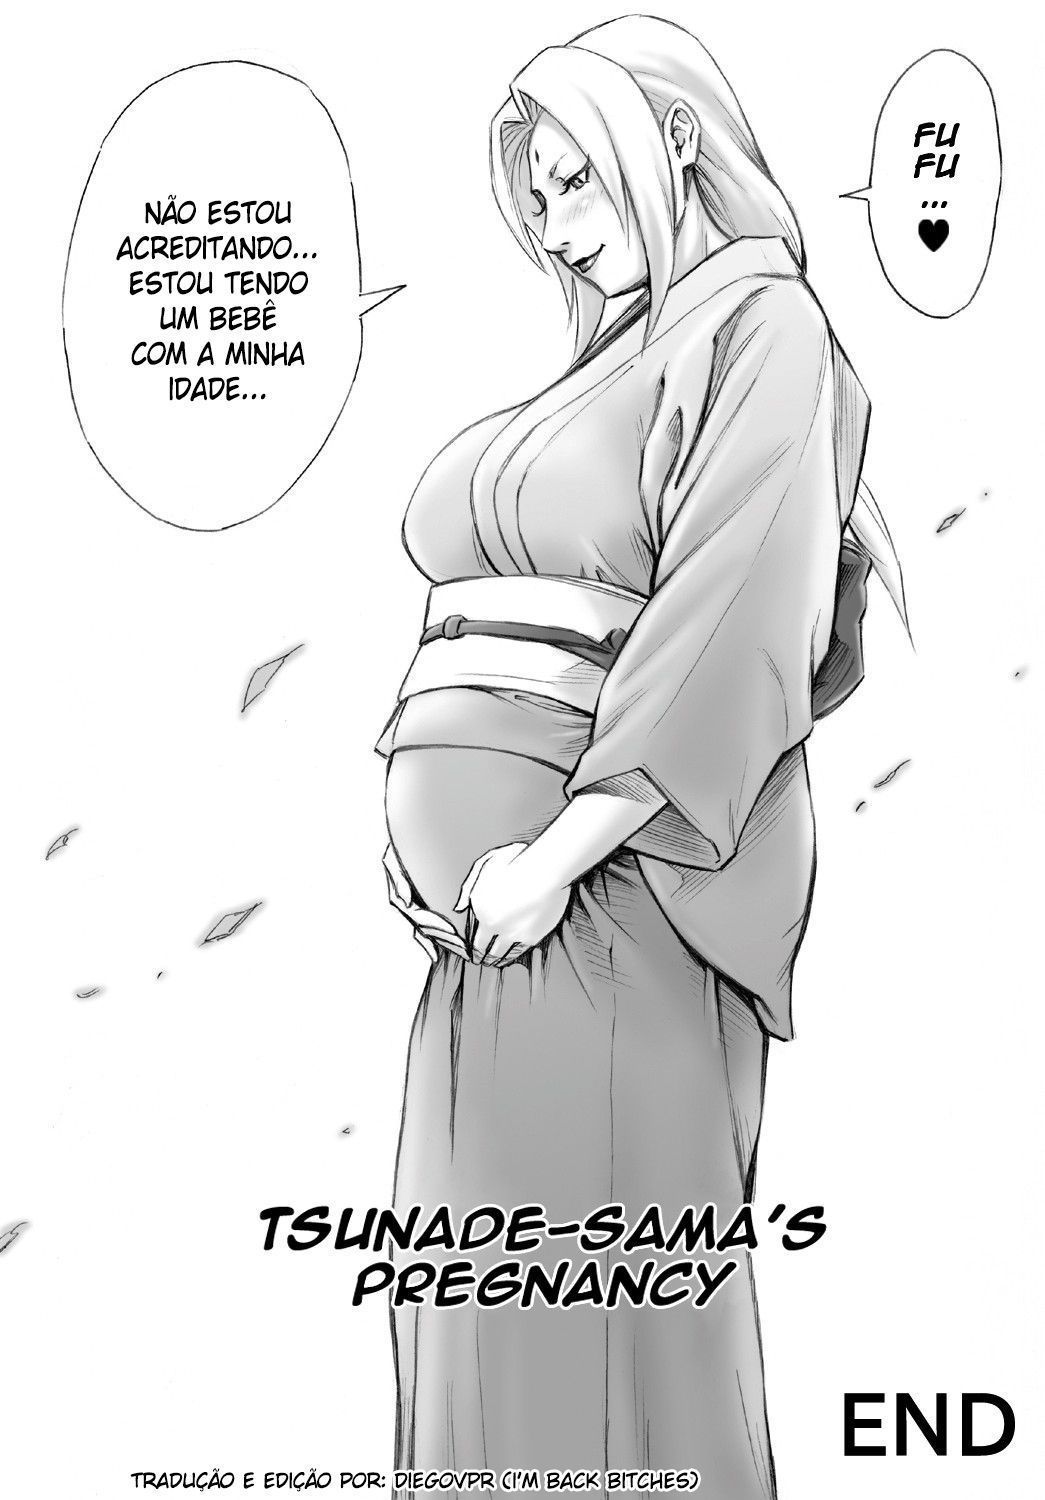 Eu quero engravidar à Tsunade